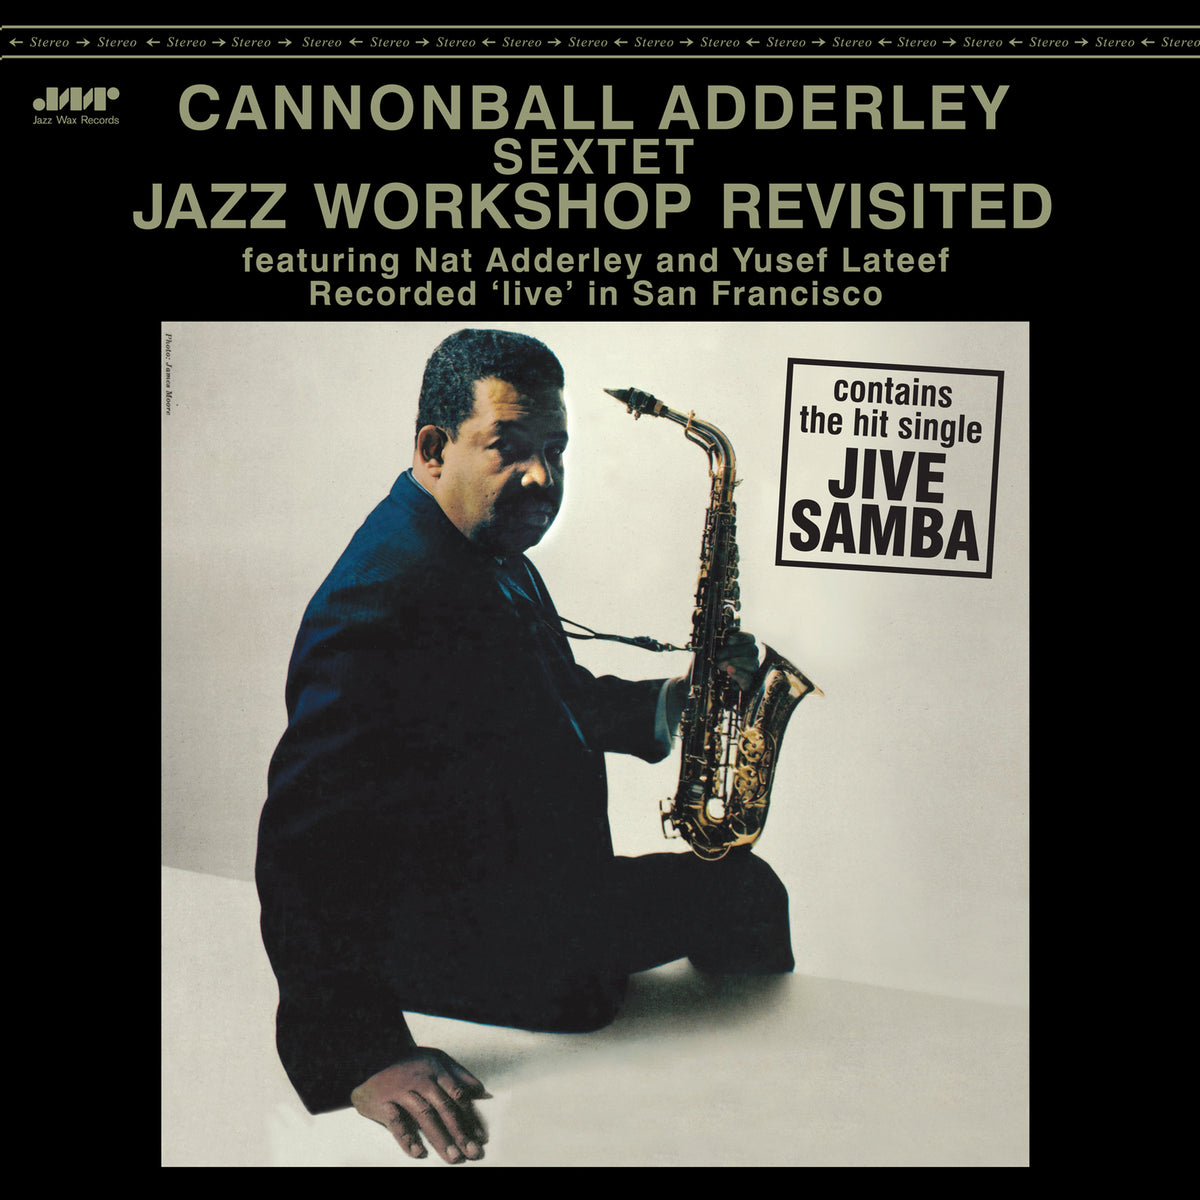 Cannonball Adderley Sextet - Jazz Workshop Revisited - 4627LP